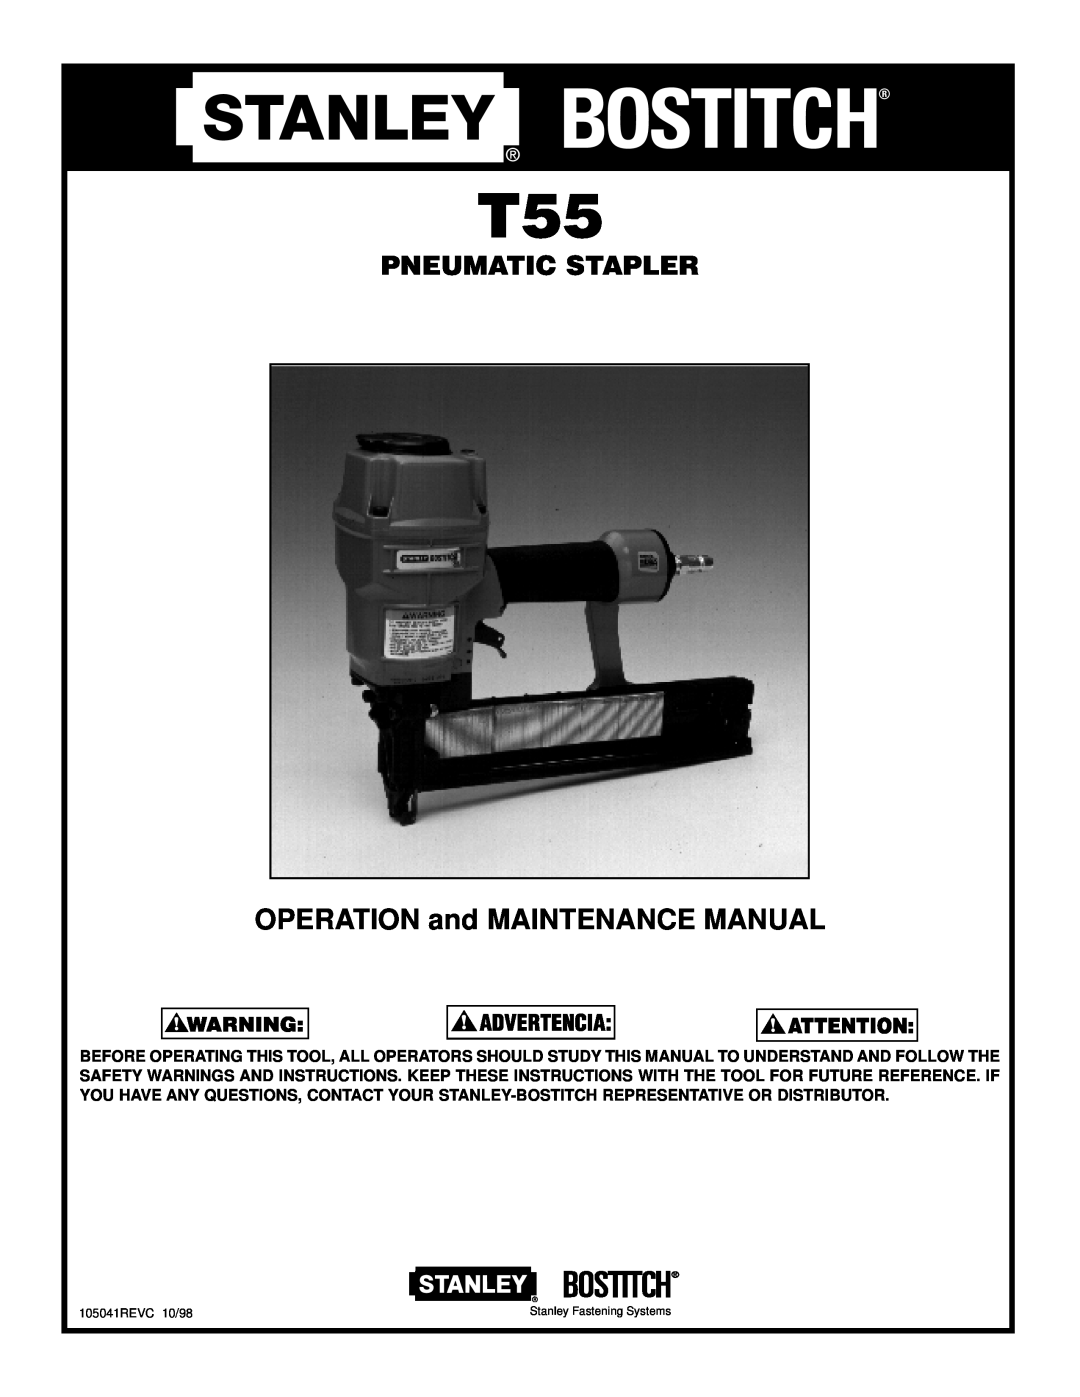 Bostitch T55 manual OPERATION and MAINTENANCE MANUAL, Bostitch, Pneumatic Stapler, 105041REVC 10/98 